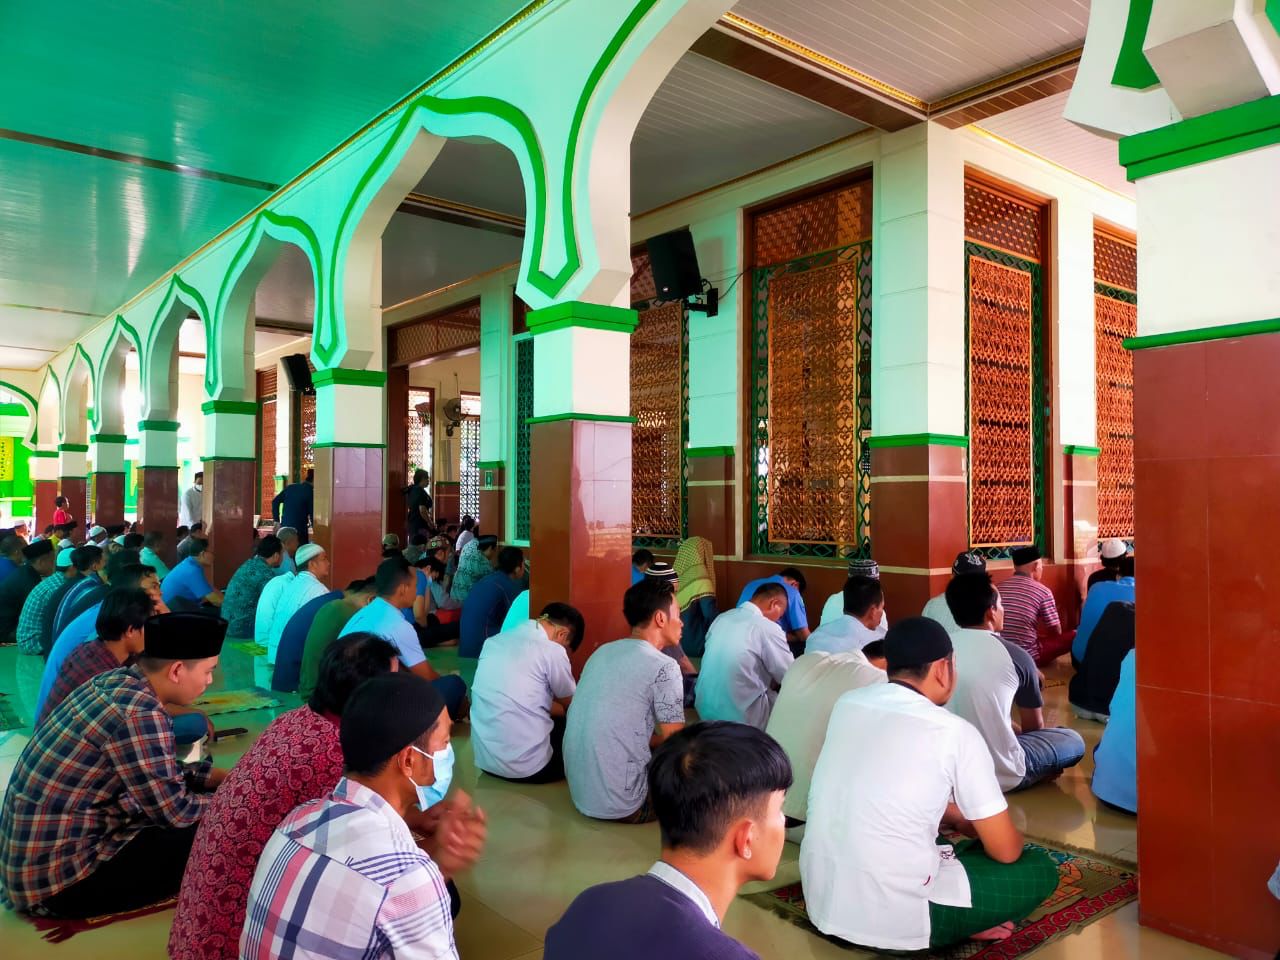 Suasana jamaah Masjid Jami Nurul Iman, Jatake, Kota Tangerang, Banten saat menjalani salat Jum'at.